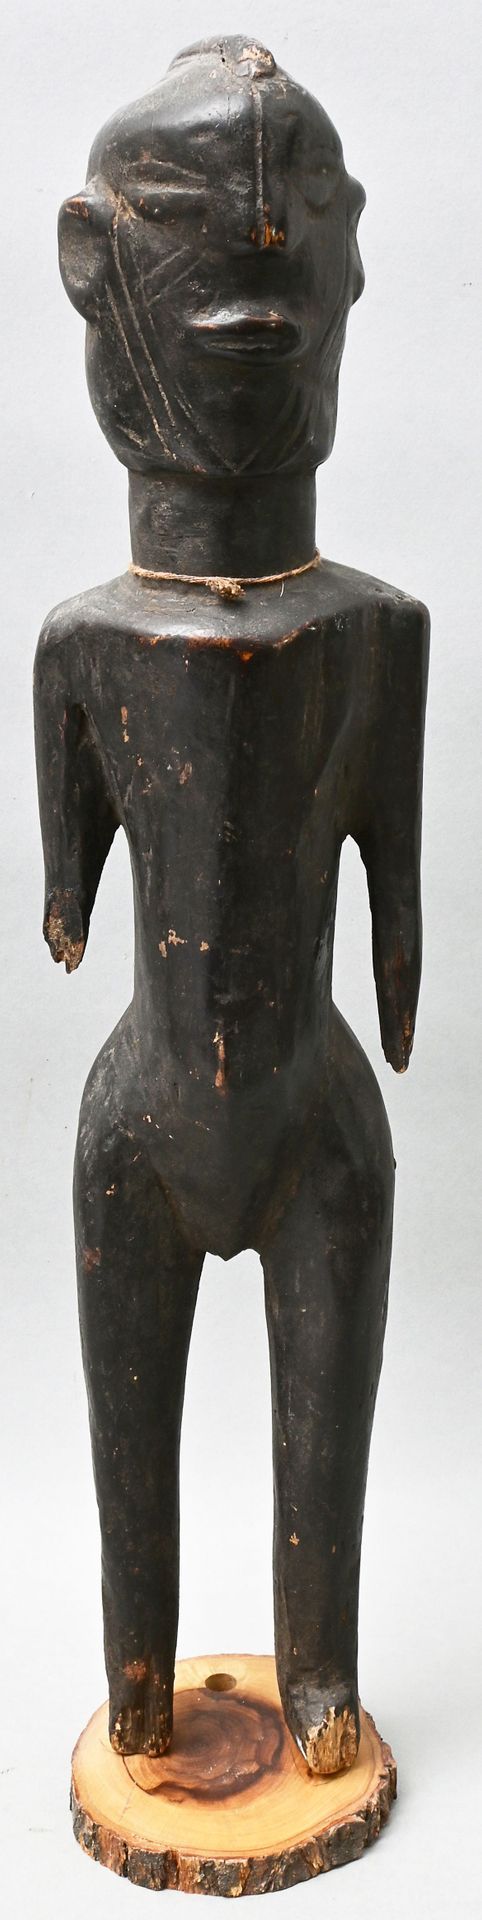 Null 人物，西非，而是：Mumuye/尼日利亚 男性人物，木头，雕刻，黑色铜锈。人物脸上的缺口装饰/伤痕纹身。颈部有两颗串联的玻璃珠。 前脚和手臂的下肢缺失&hellip;